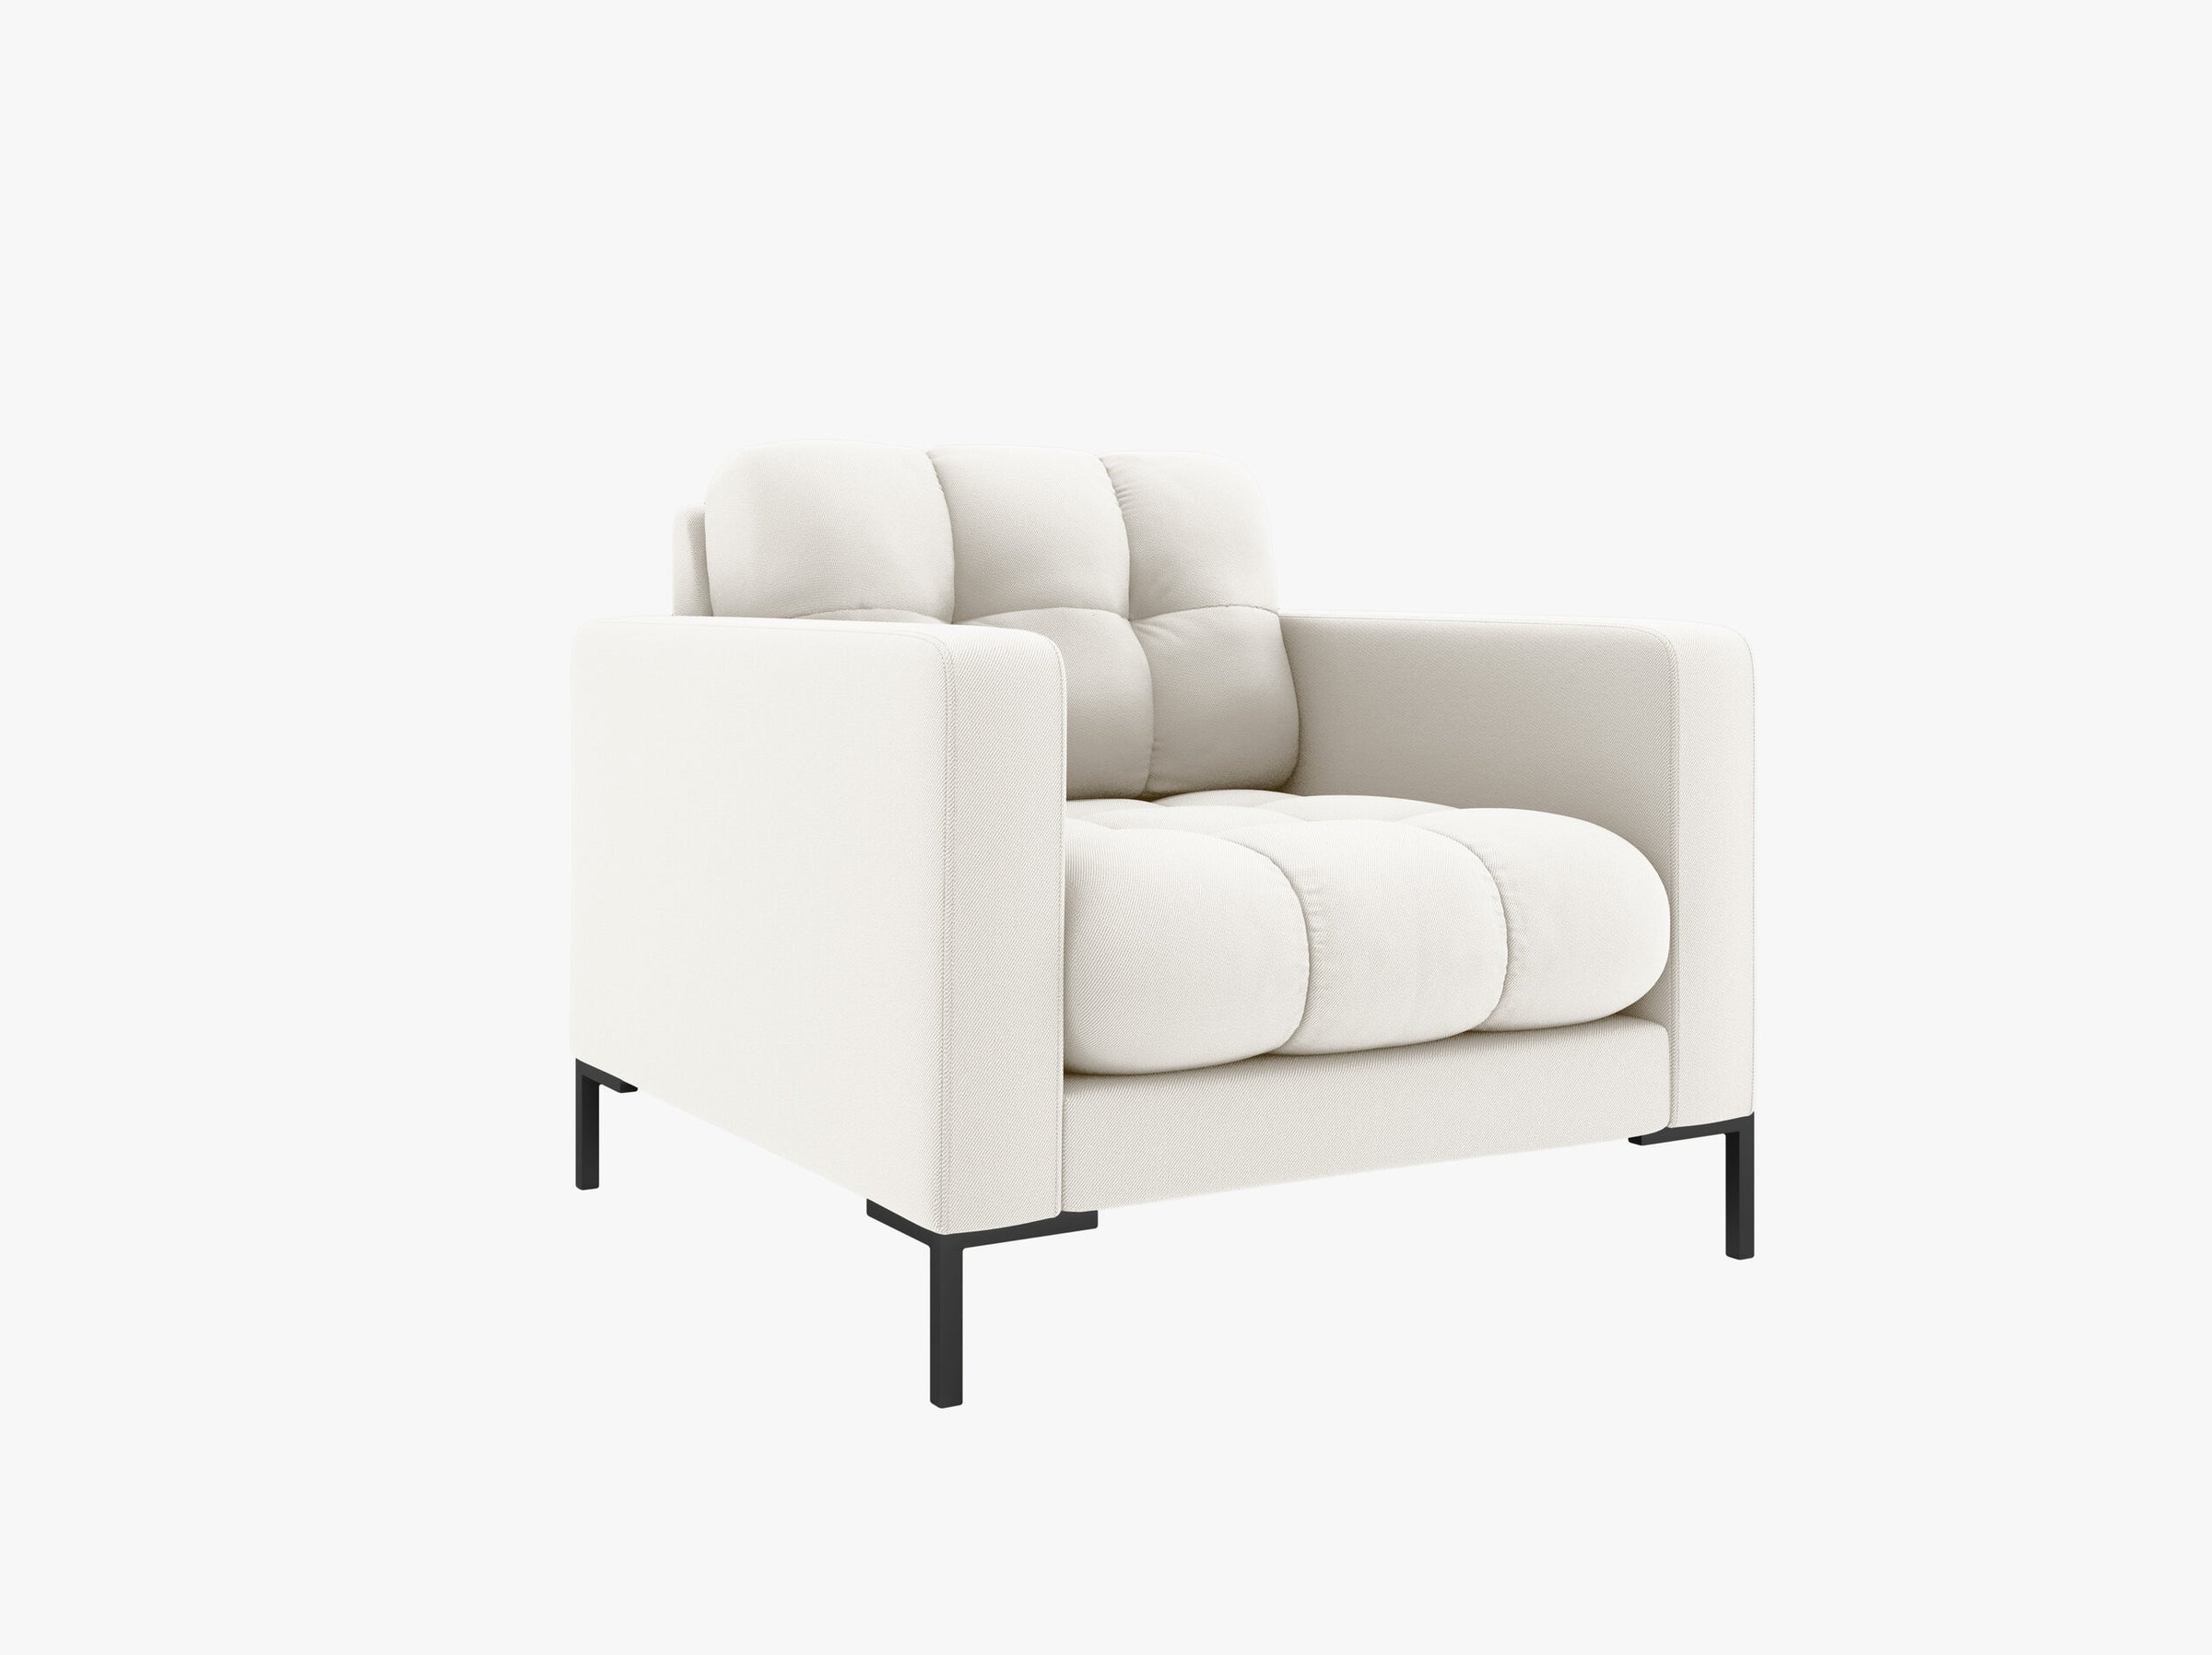 Mamaia sofas structured fabric light beige